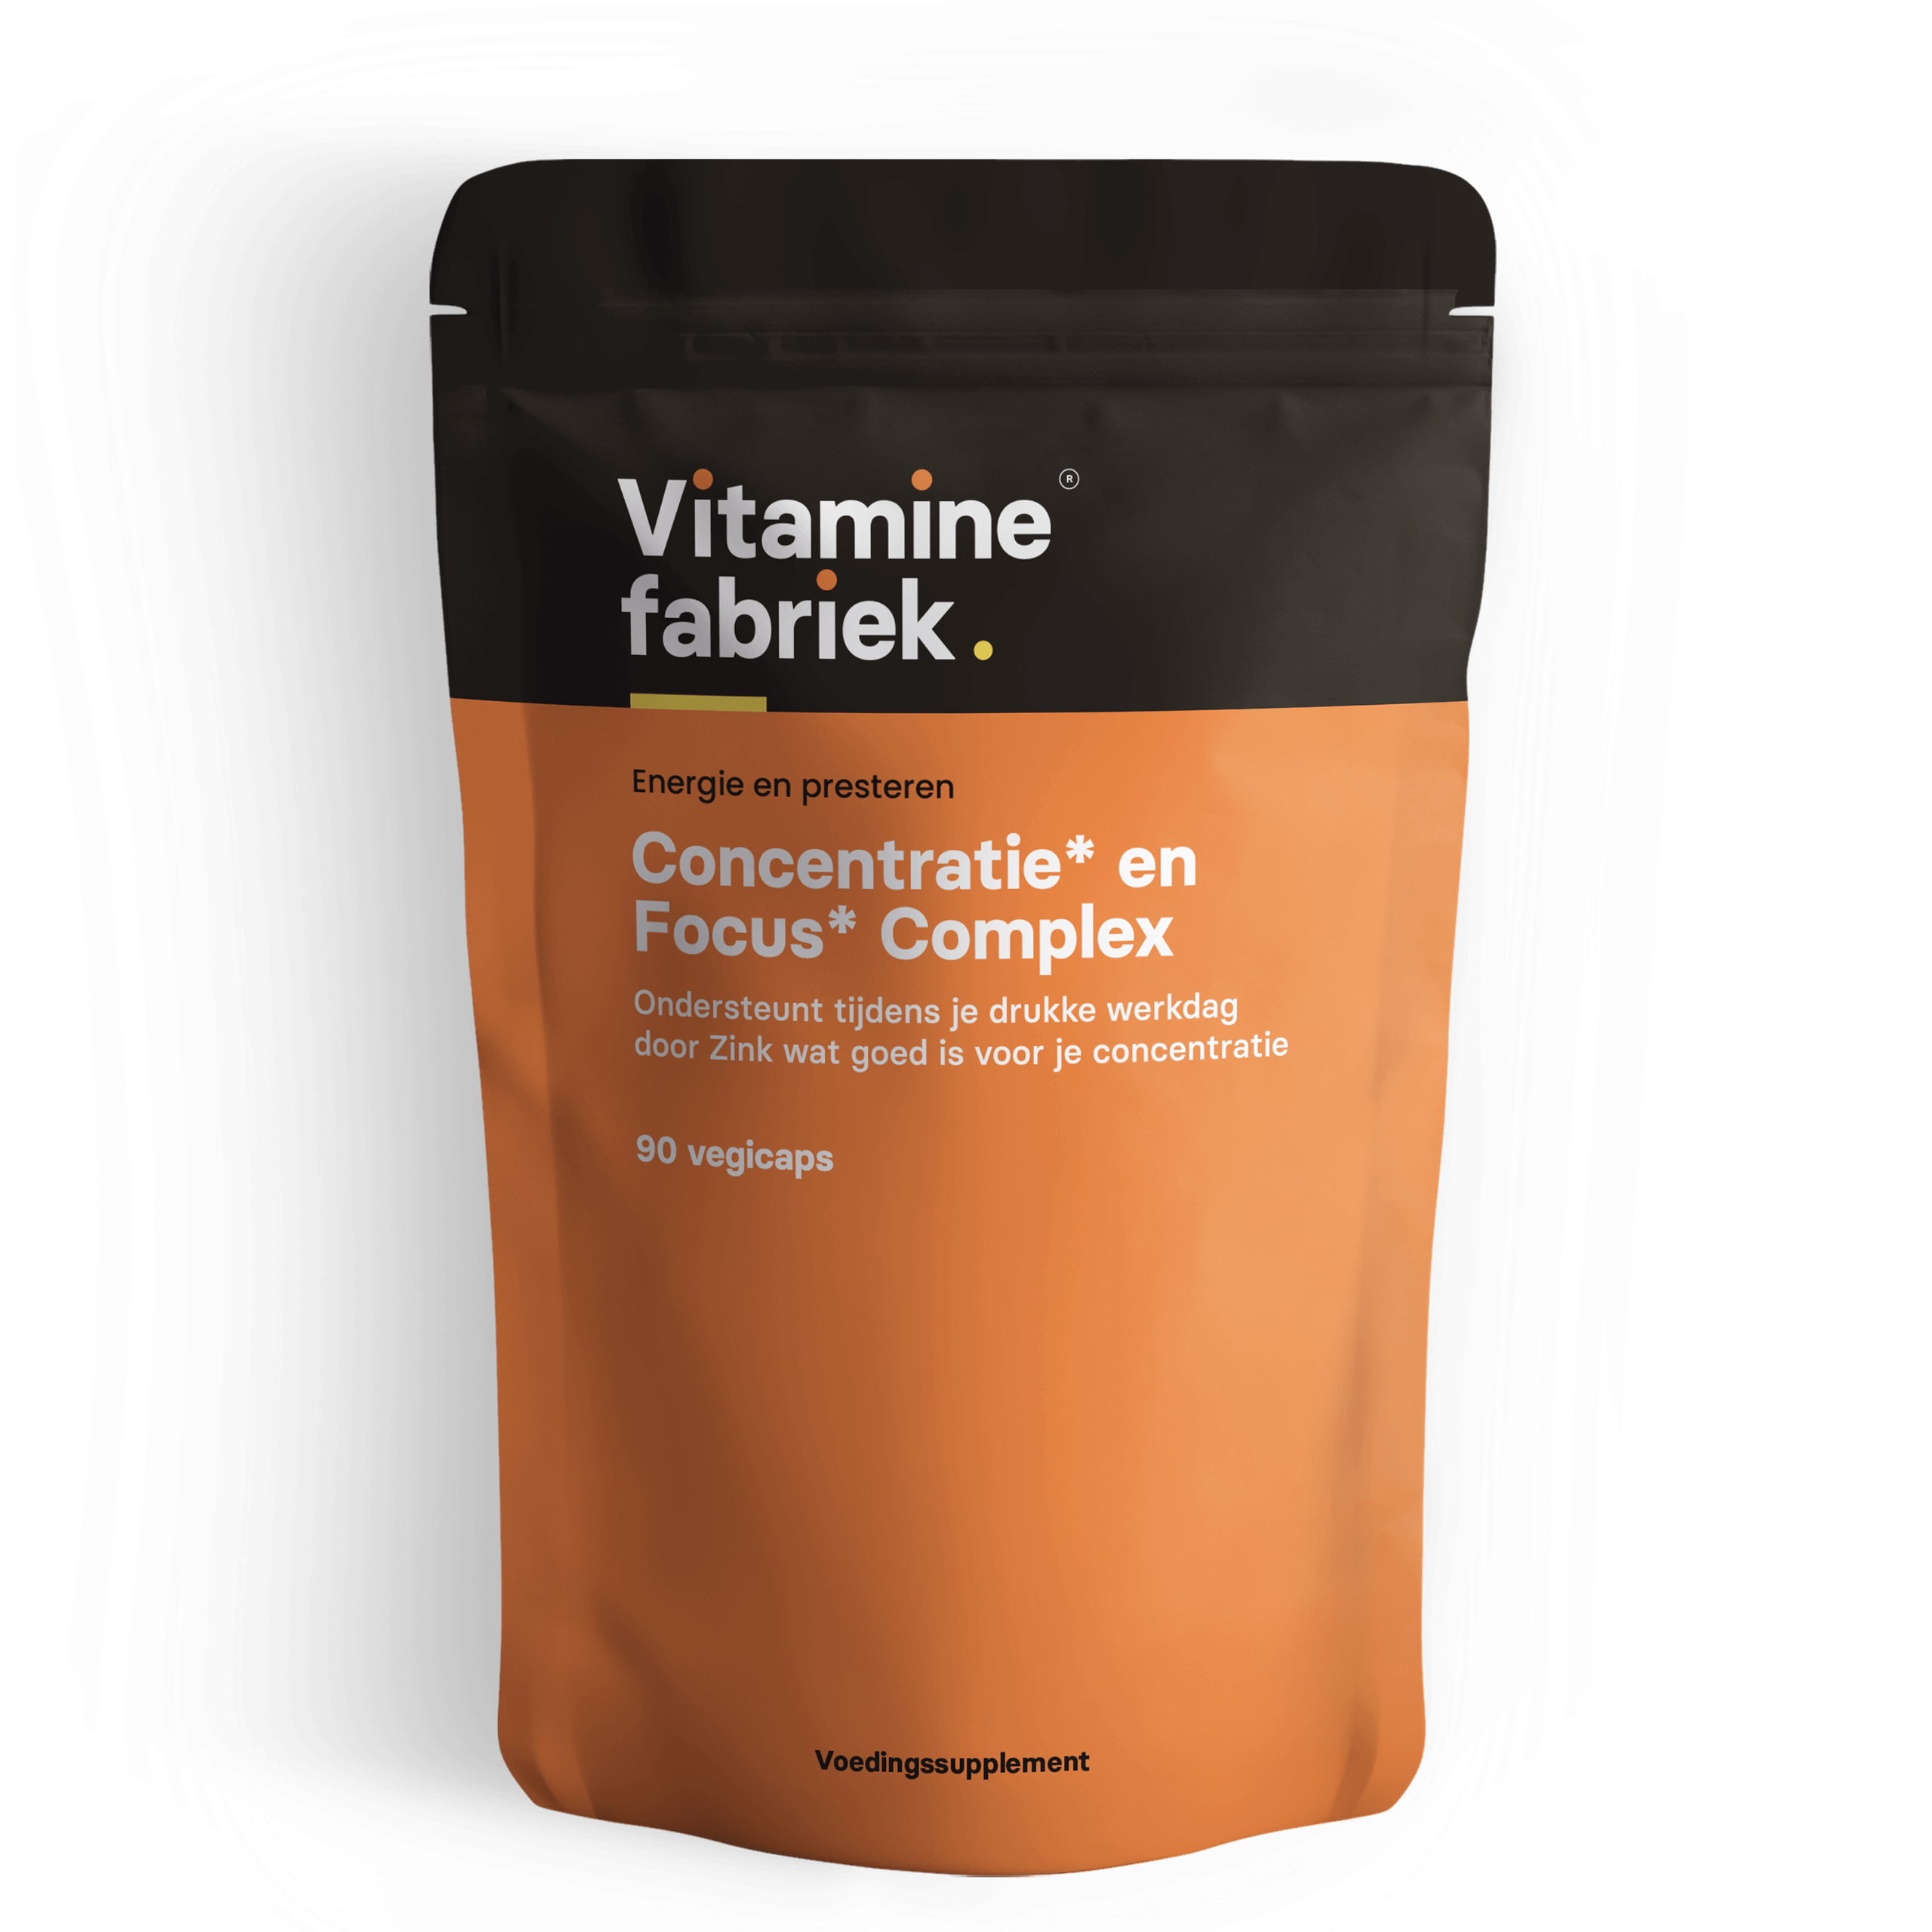 Concentratie* en Focus* Complex - 90 vegicaps - Vitaminefabriek.nl